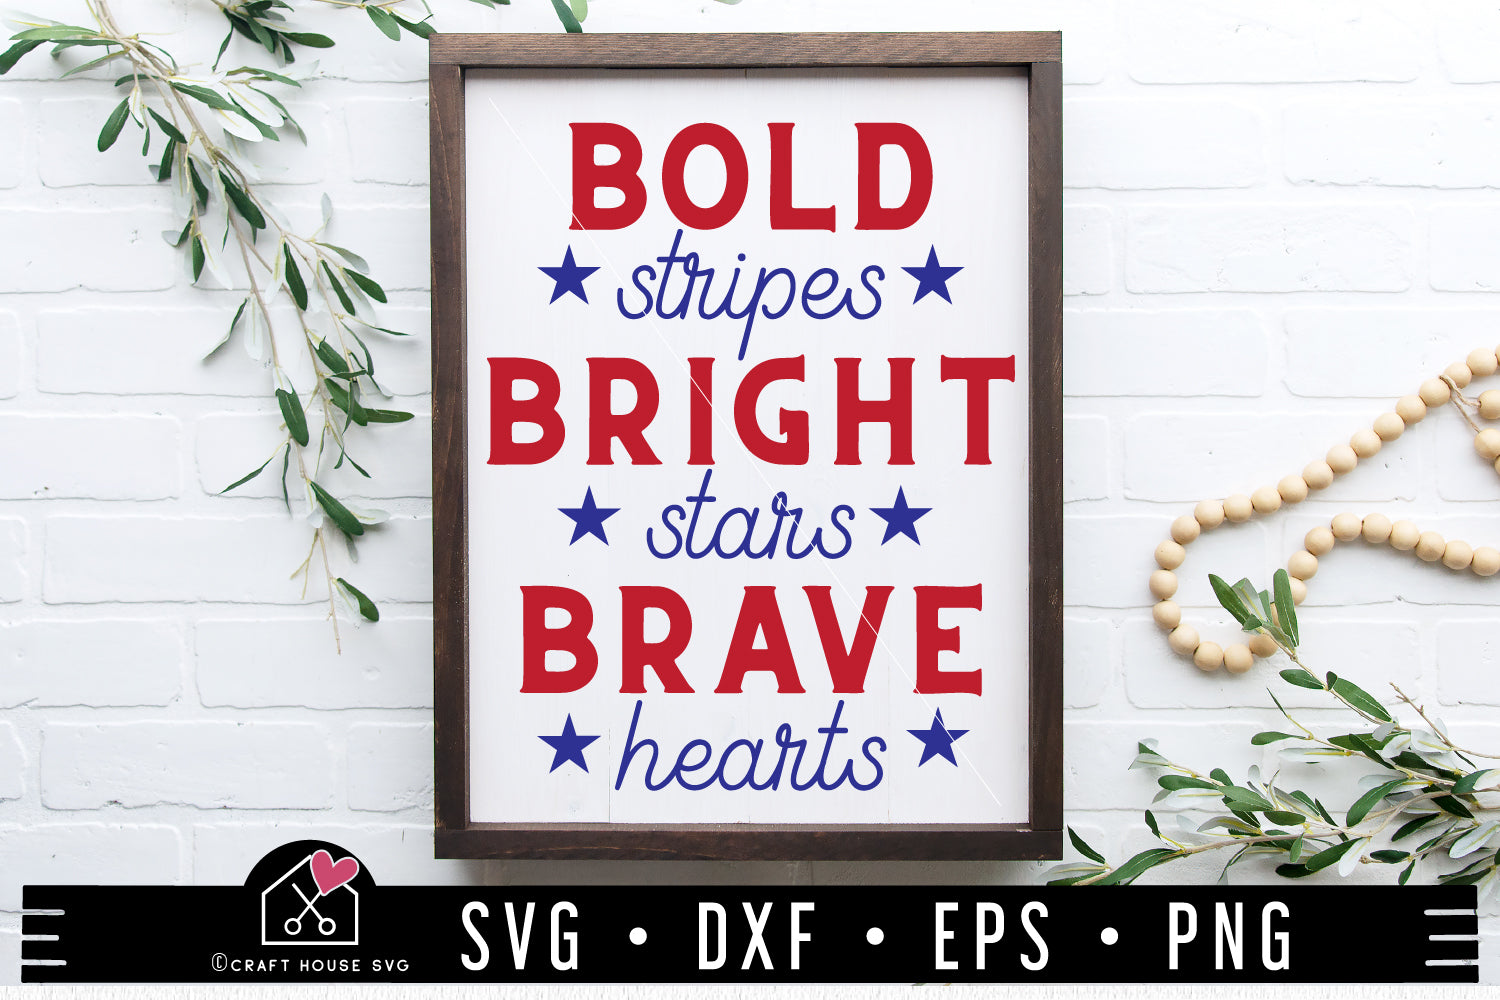 Bold Stripes Bright Stars Brave Hearts SVG 4th of July Sign Design Cut Files